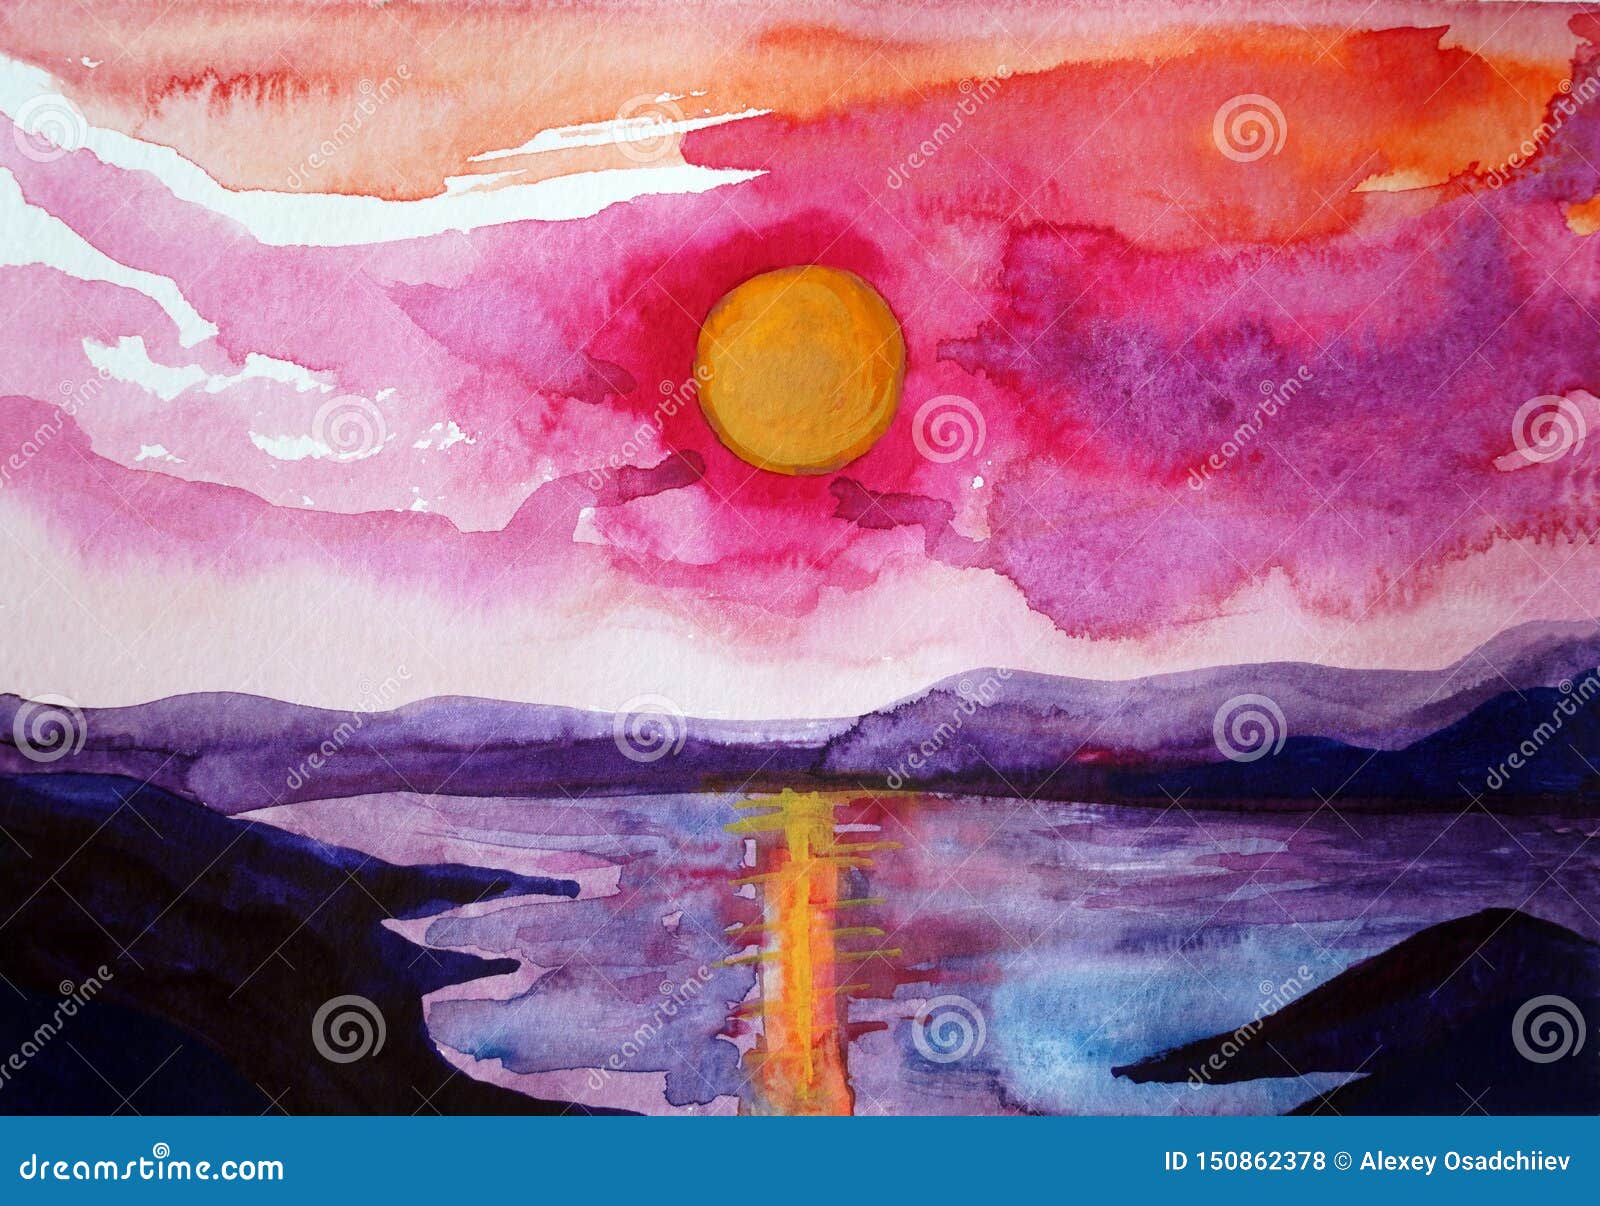 Drawing Of Bright Sunset Sunrise Over The Sea Stock Photo Image Of Coast Background 150862378